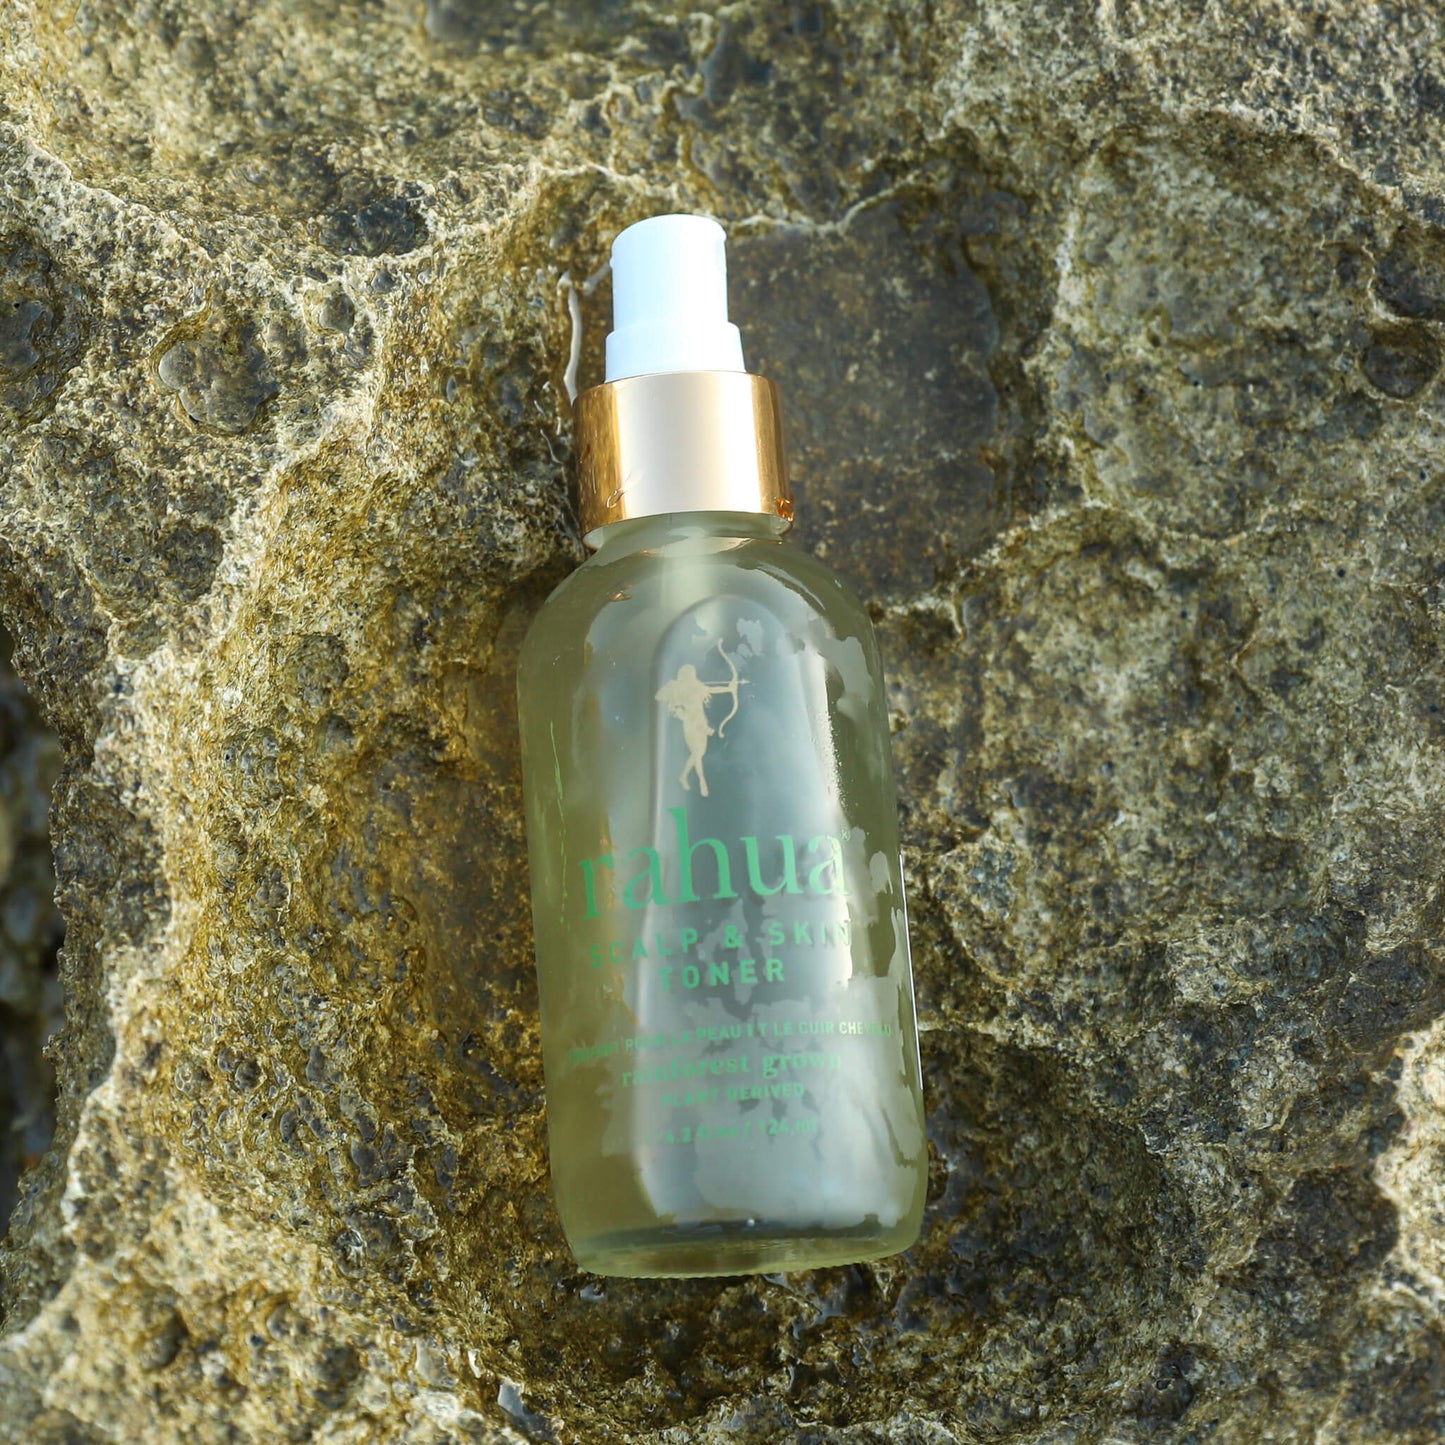 Rahua Scalp and Skin Toner on beautiful green stone with water